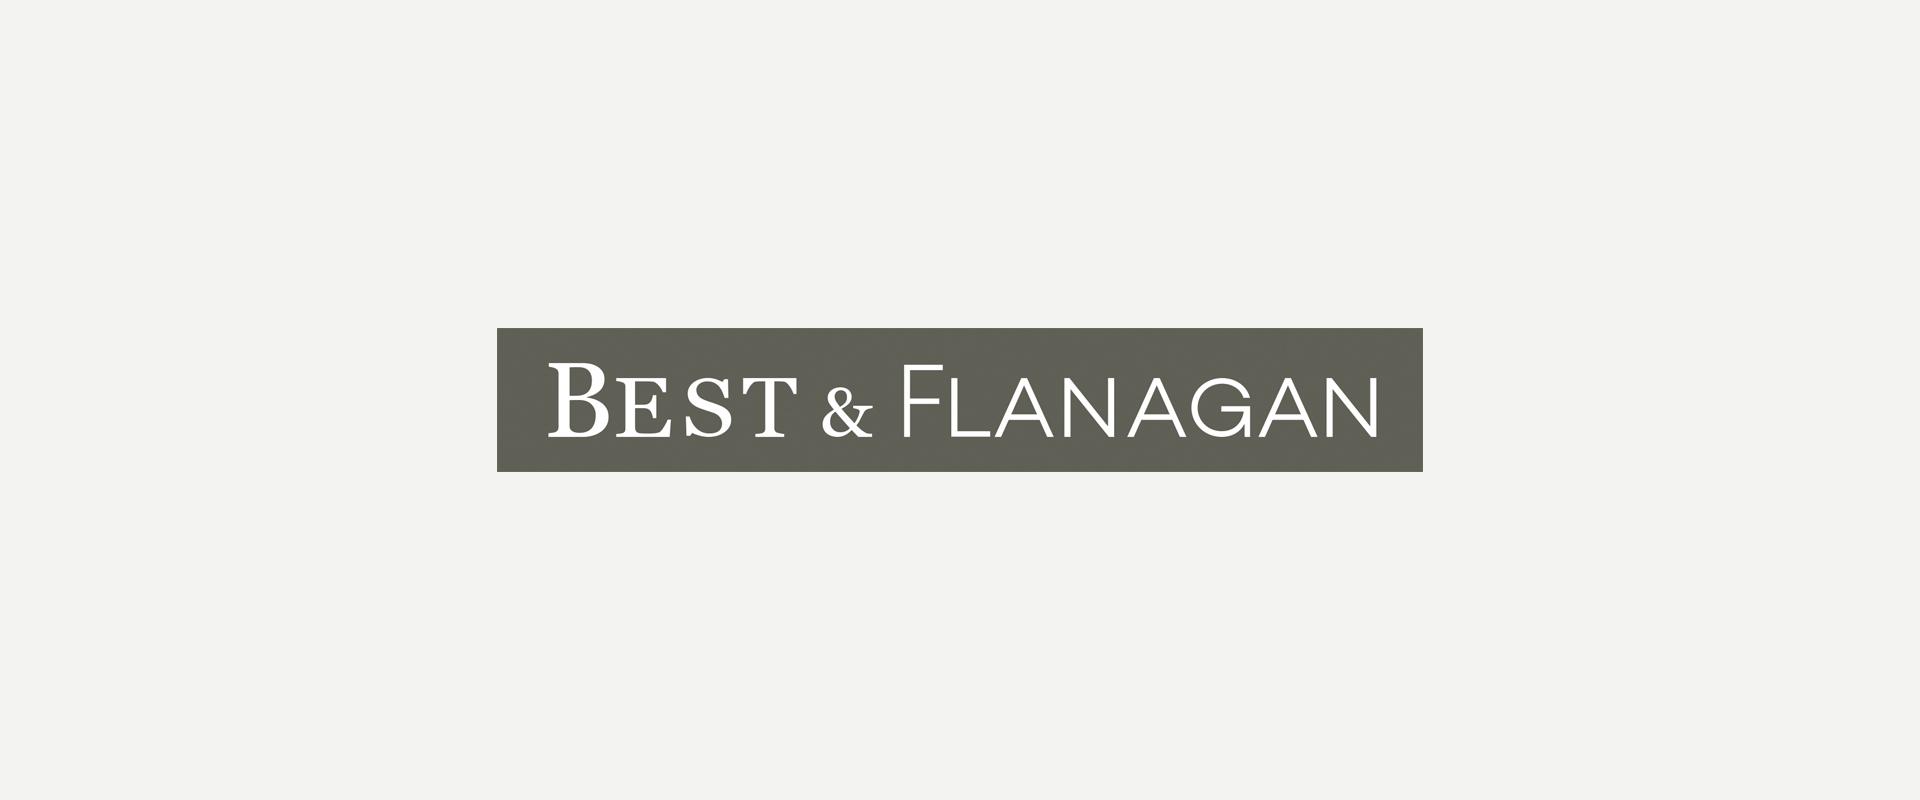 Flanagan Logo - Best & Flanagan | Content Pilot